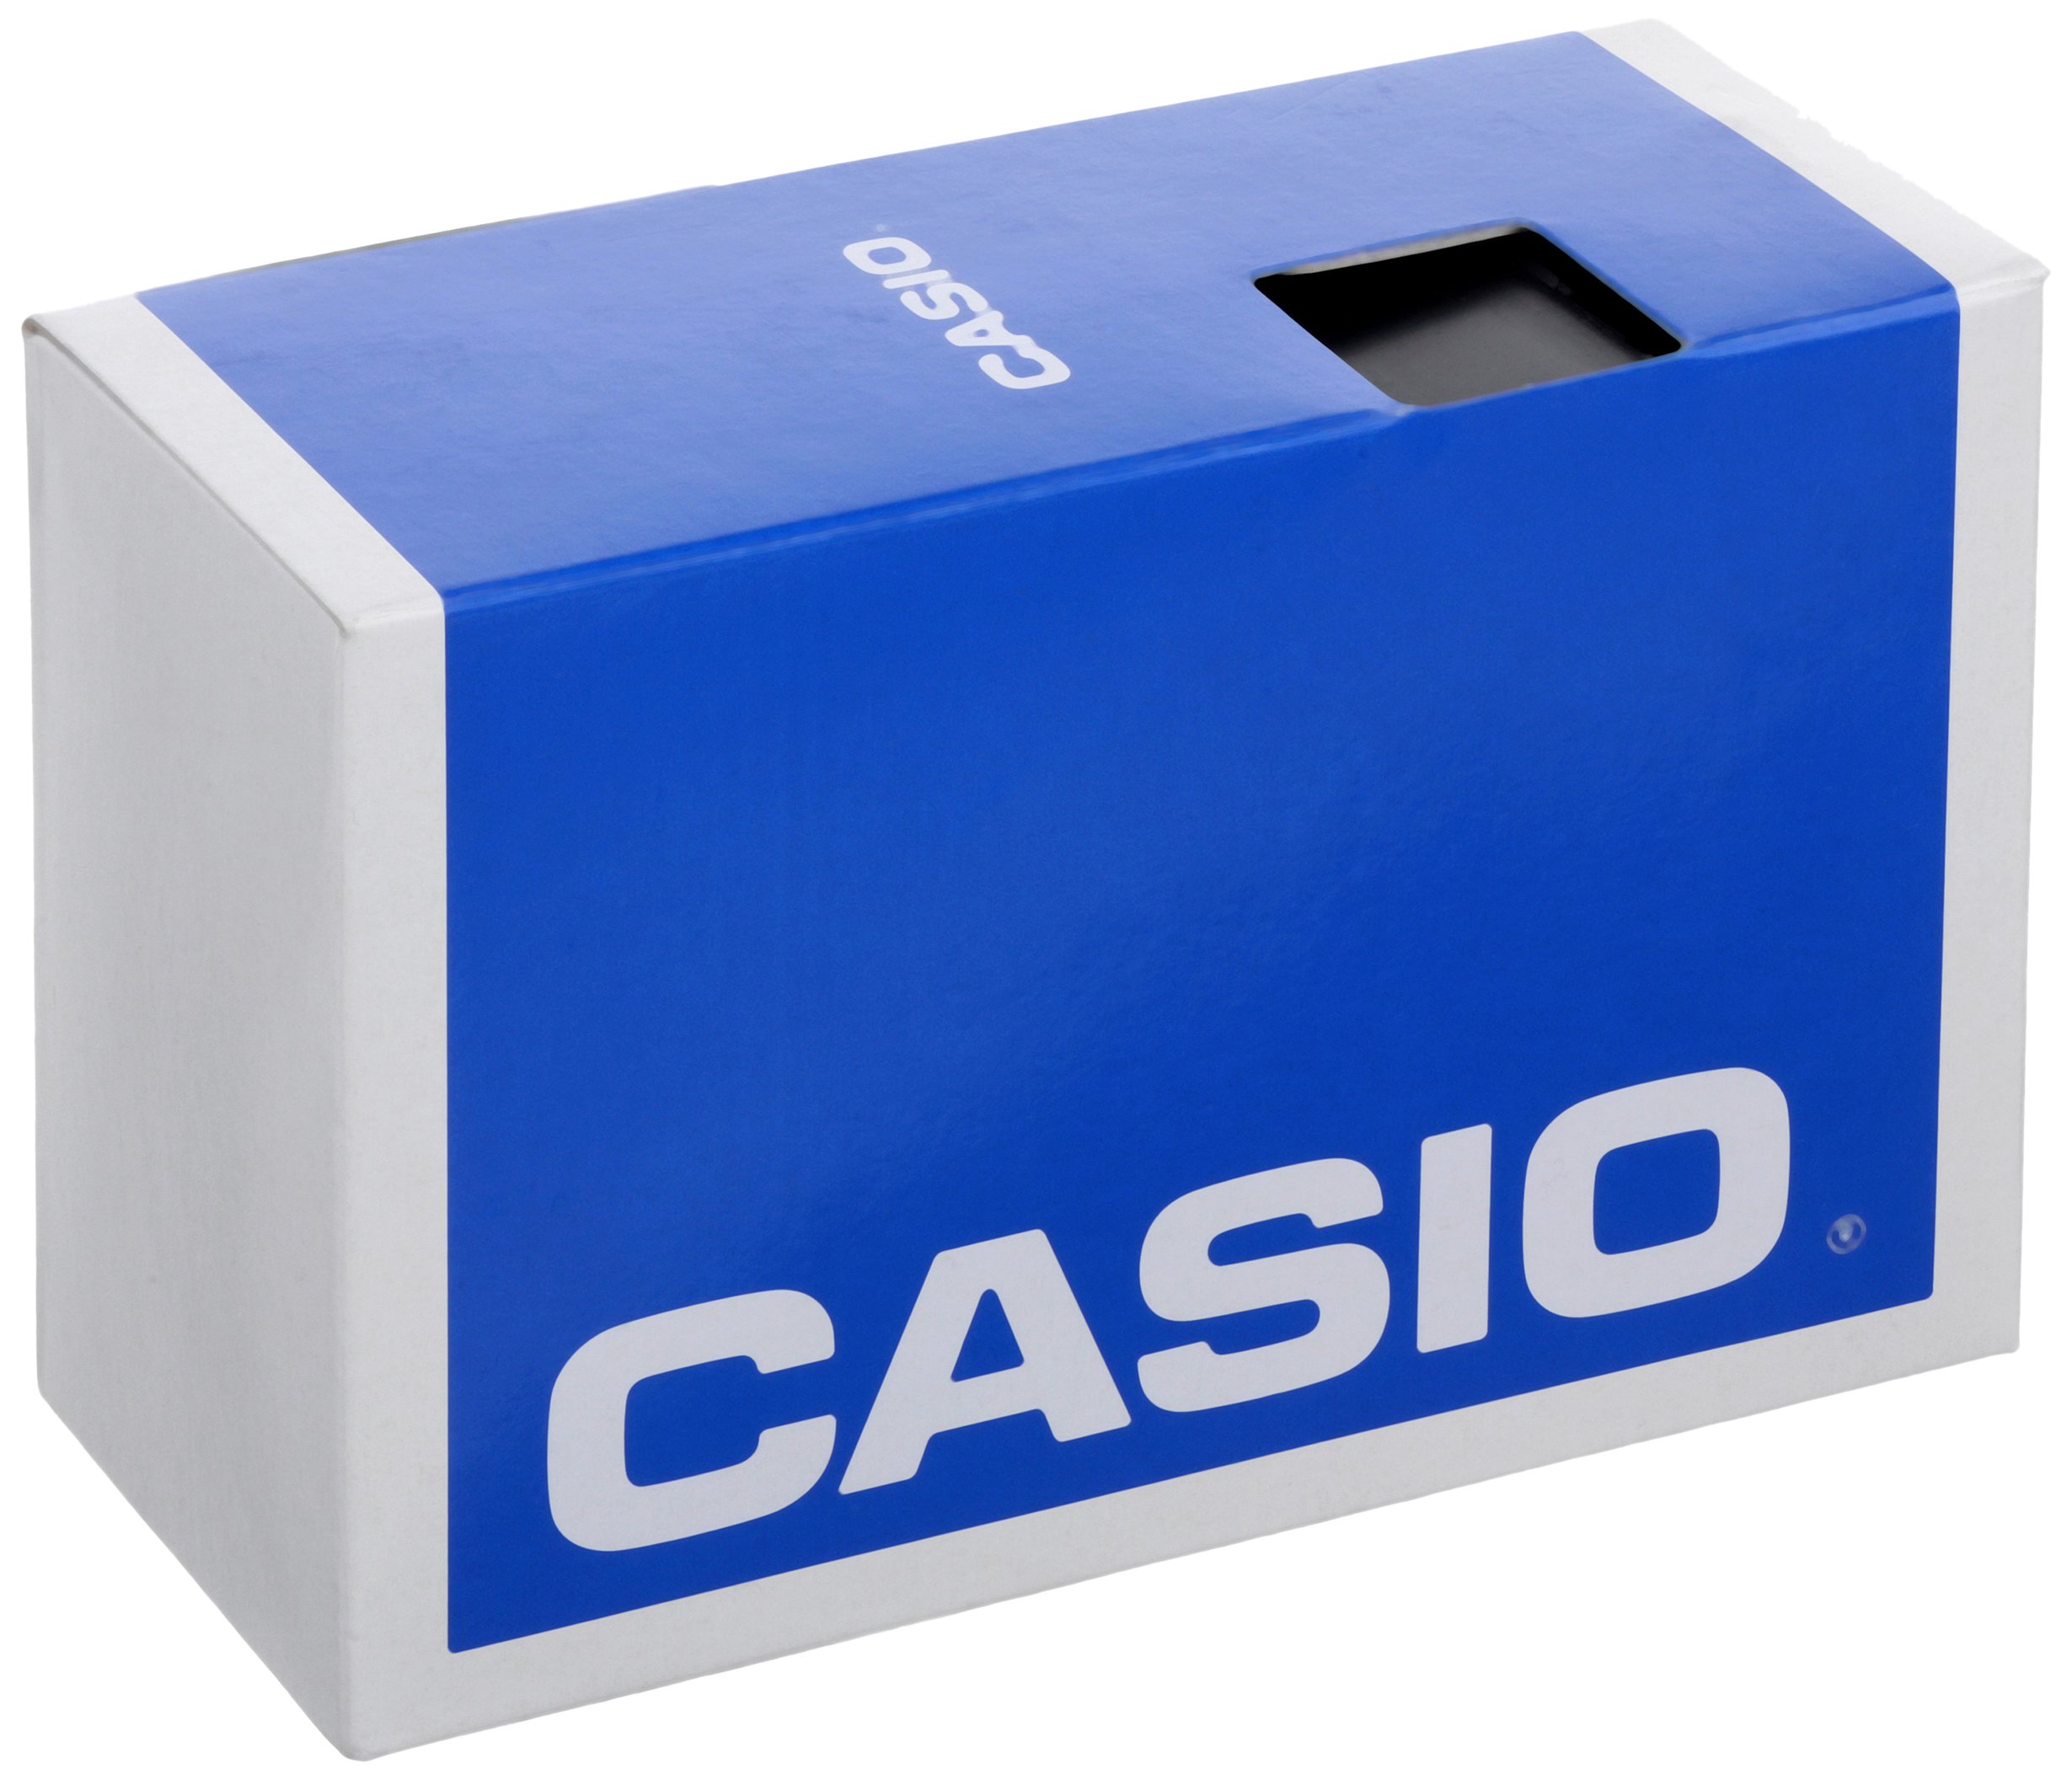 Casio Men's A700W-1ACF Classic Digital Display Quartz Silver Watch